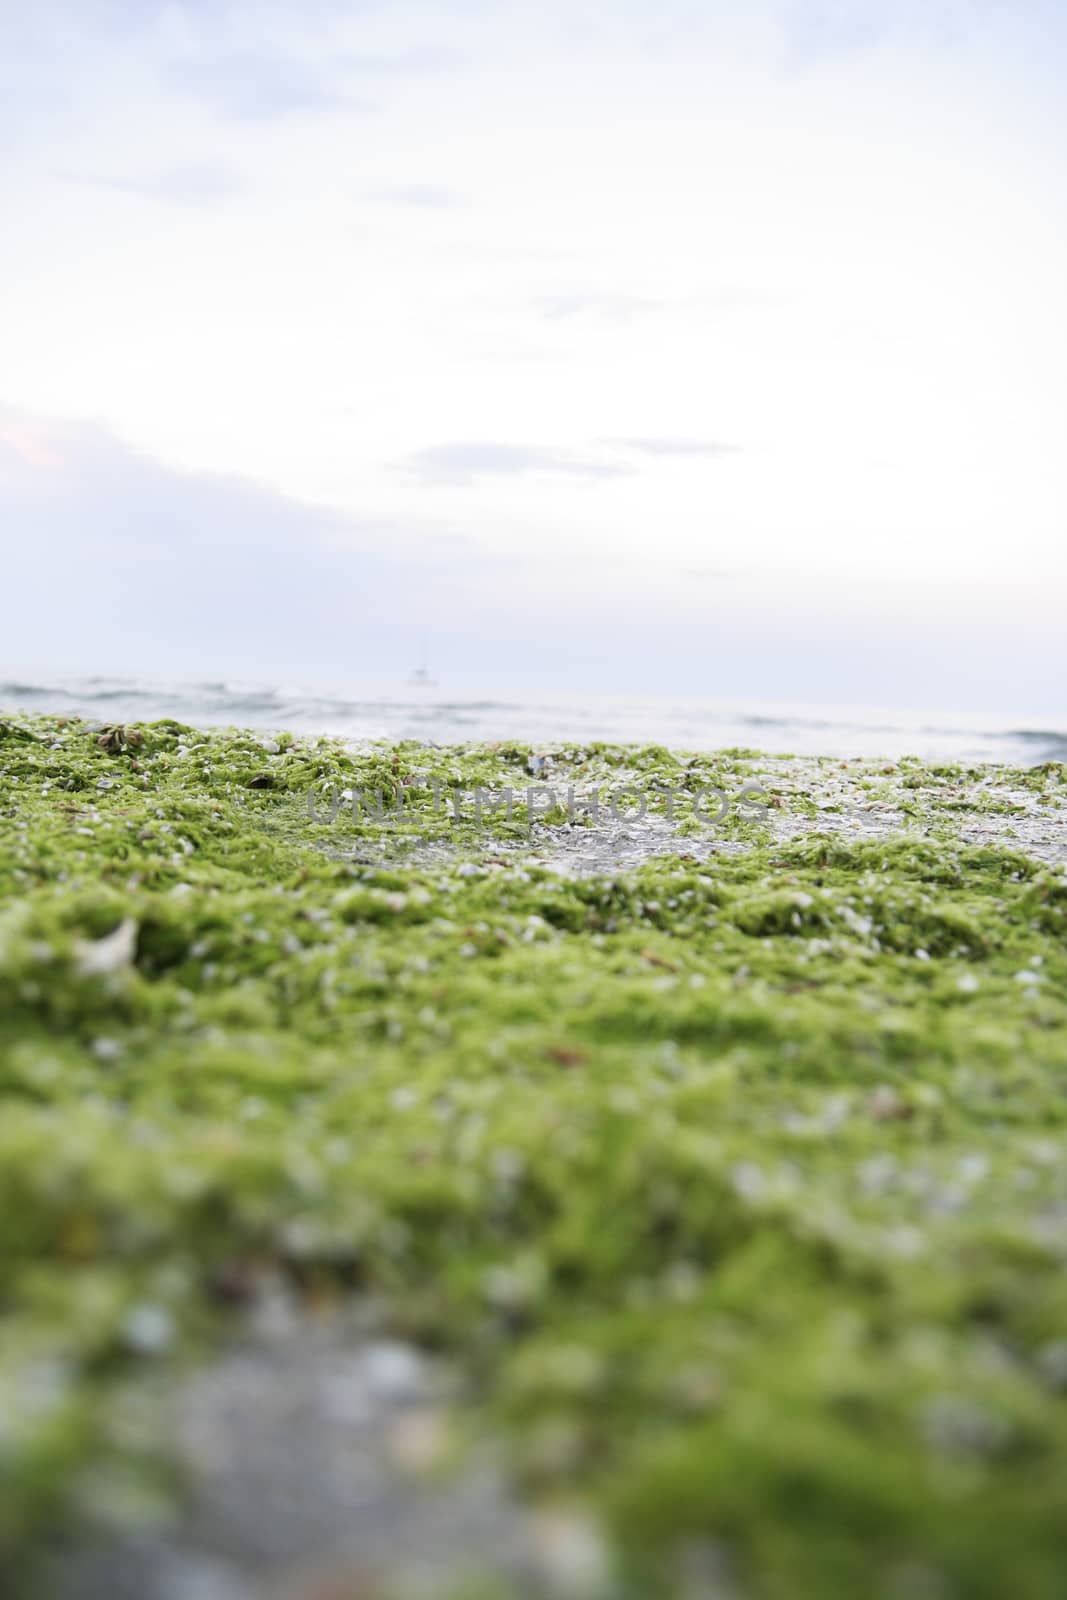 Beach with algae and shells.